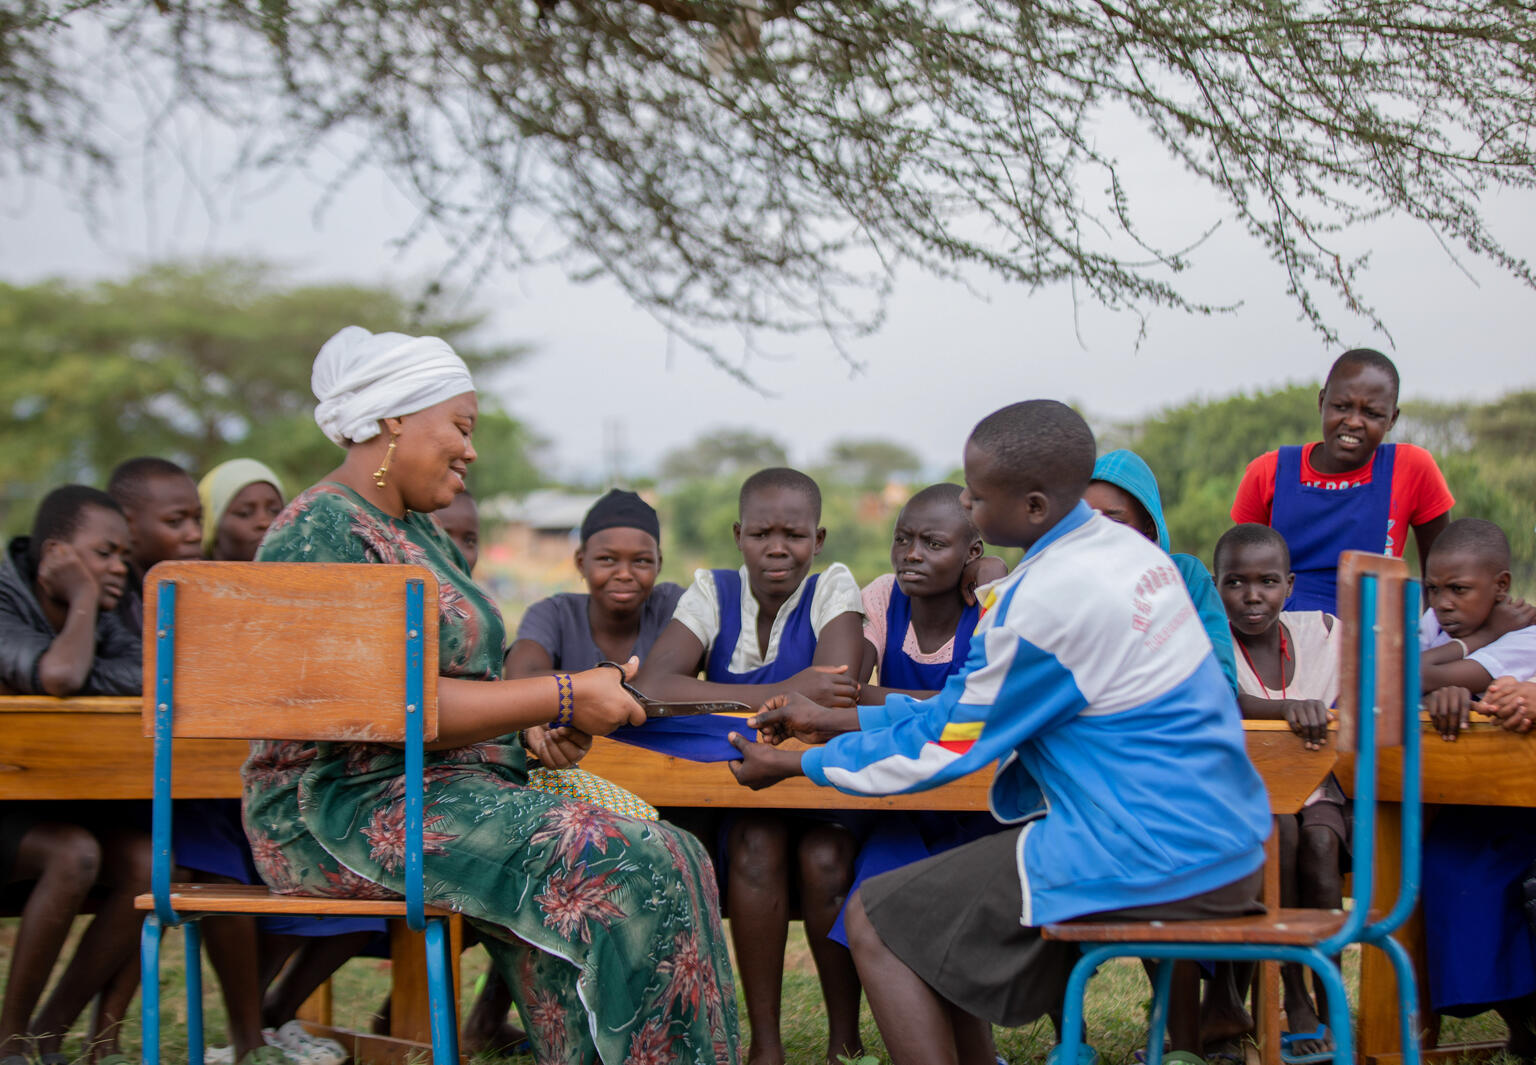 The Senior Woman Teacher at Katikit Primary School, Lucy Nyambura shows members of the Girls O School